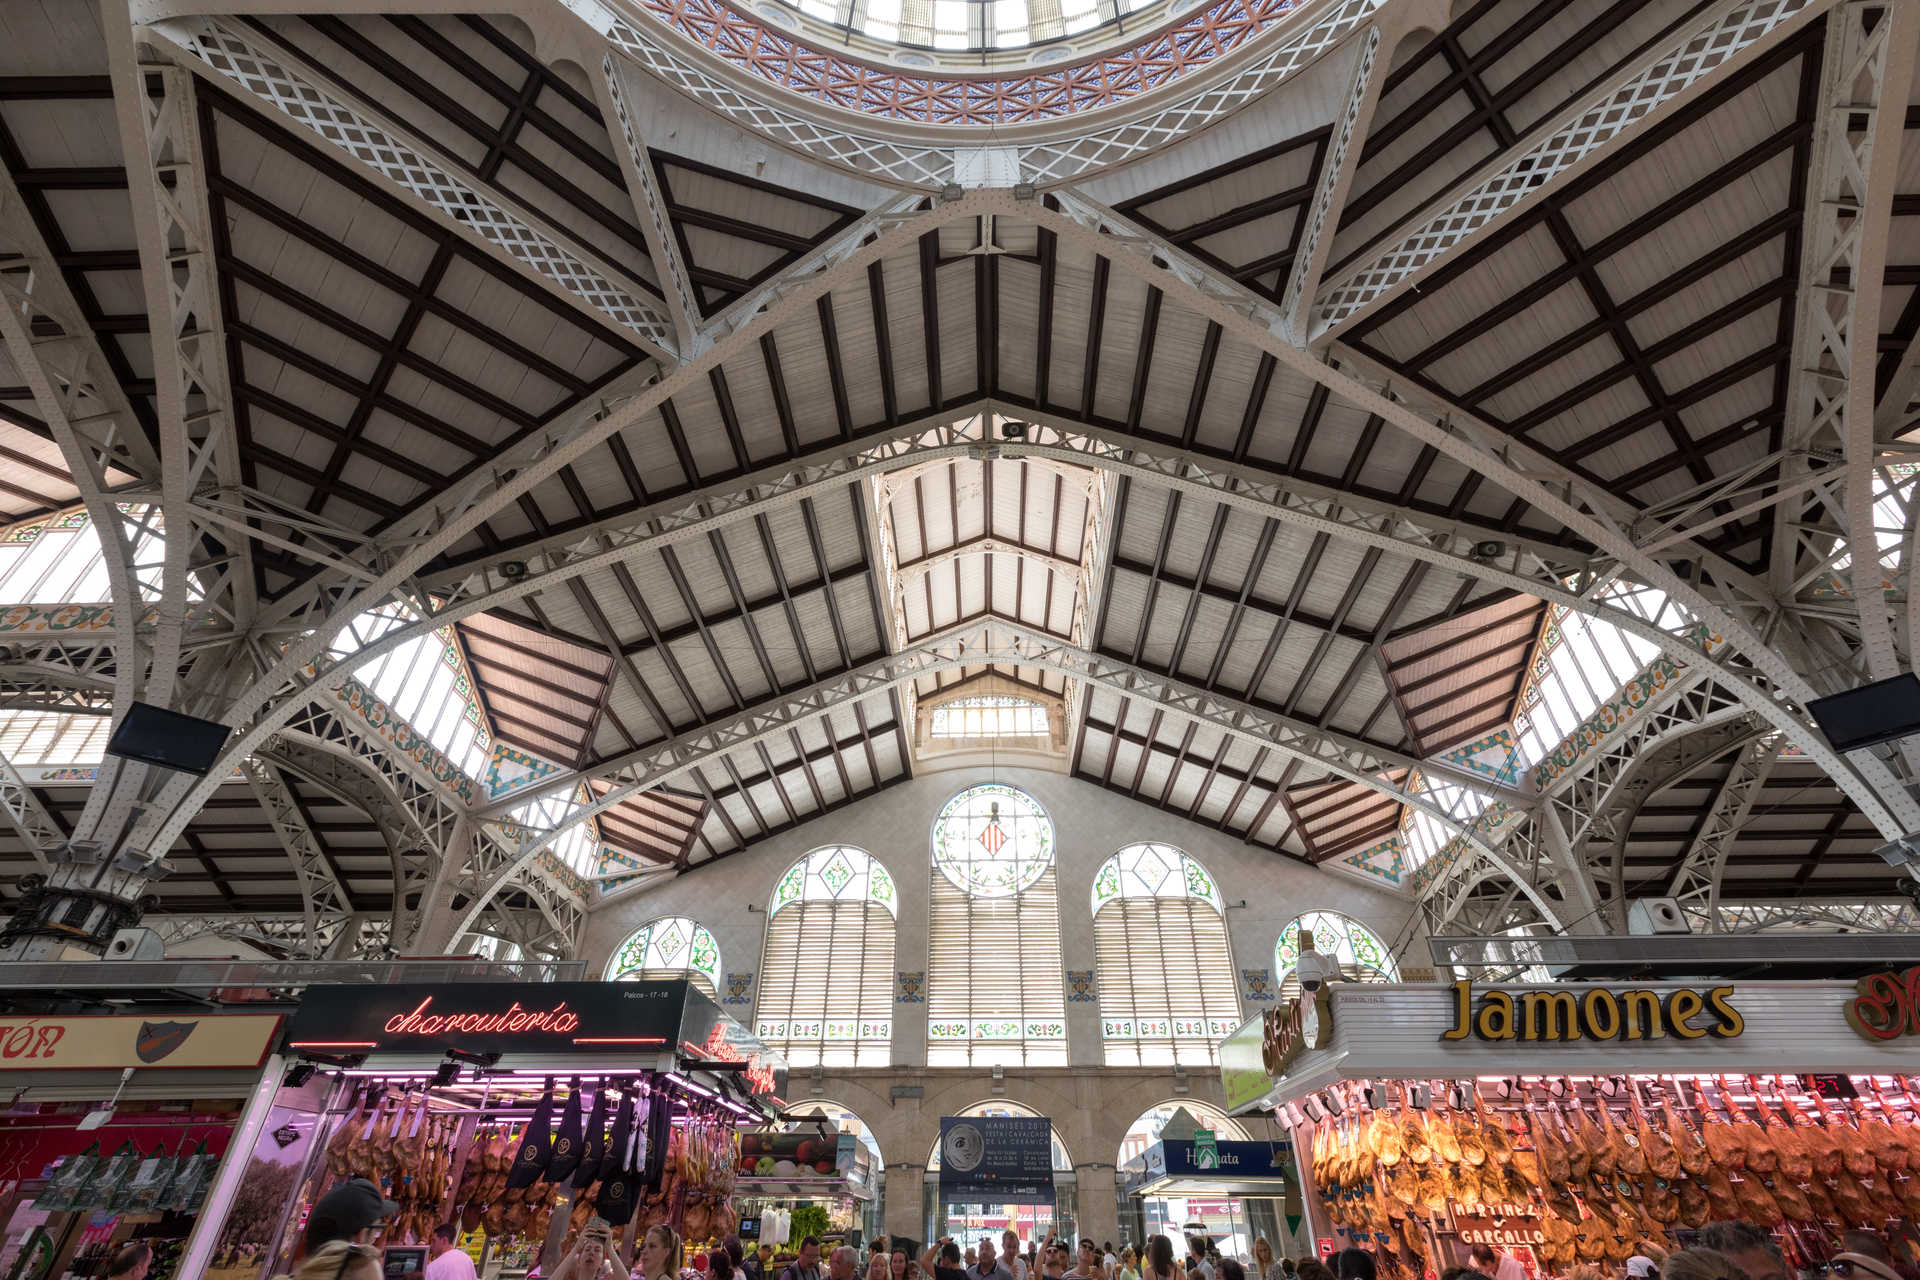 The Central Market in València